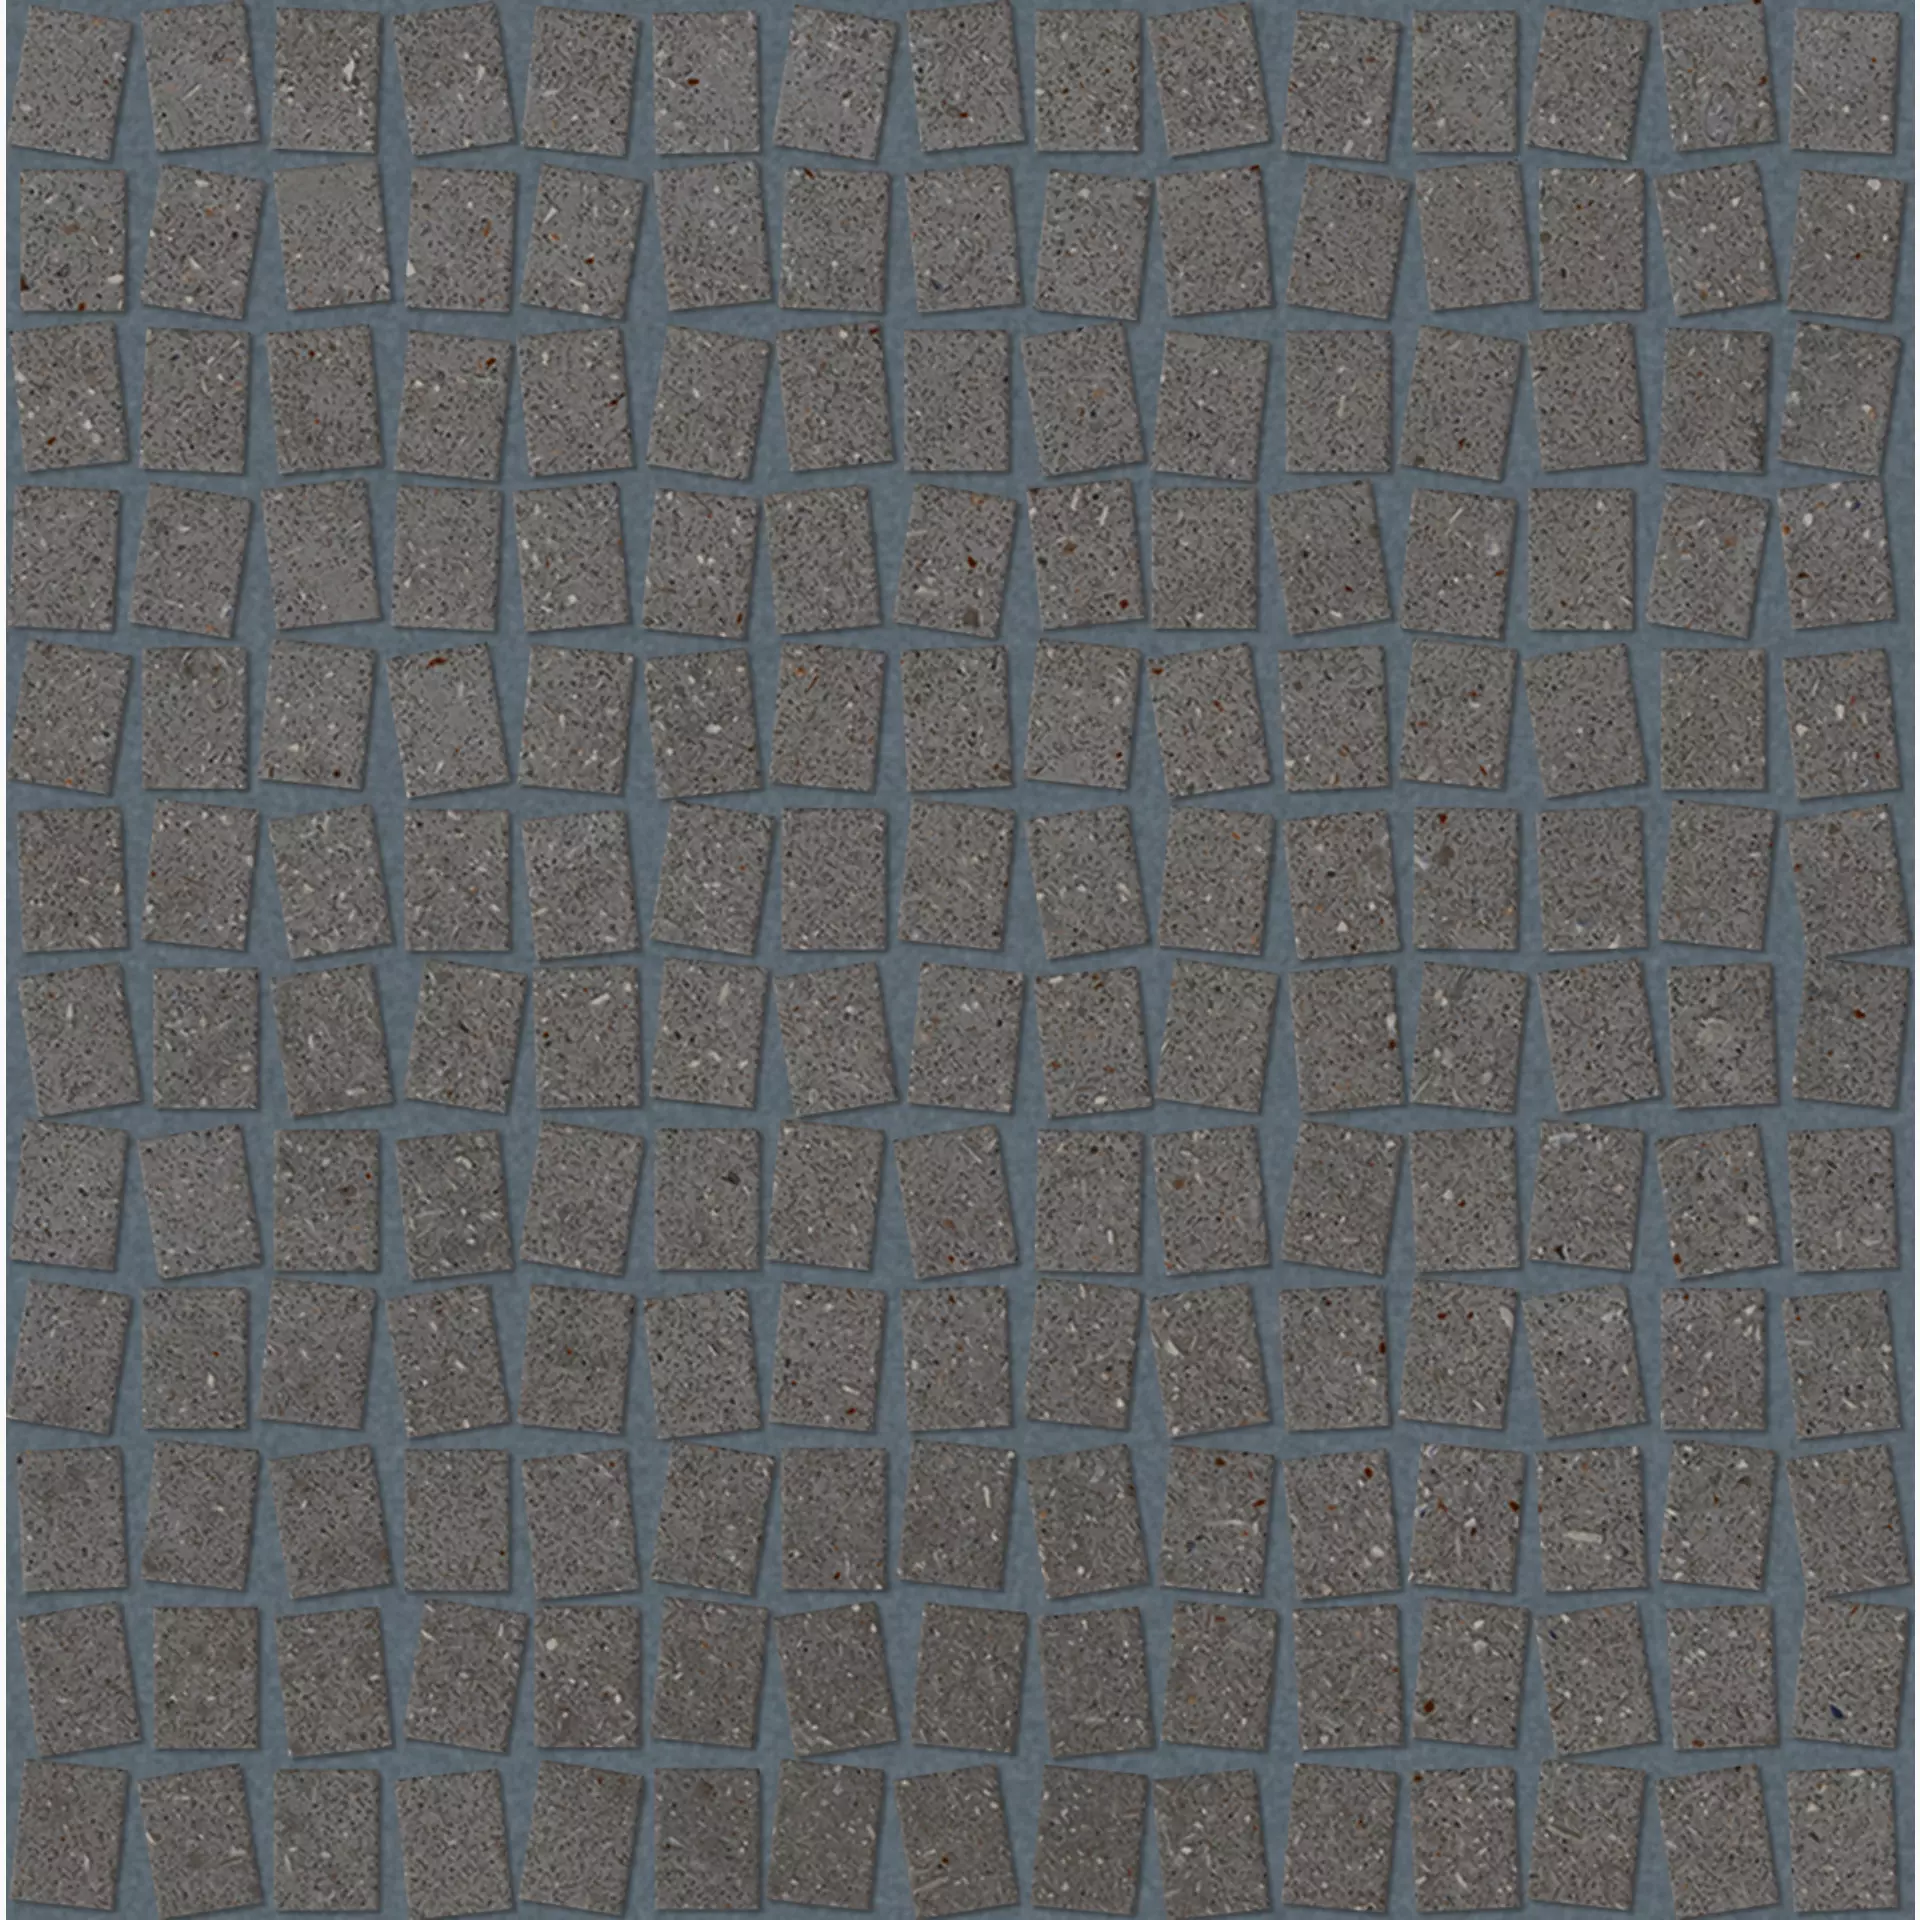 Imola Blox Grigio Scuro Natural Flat Matt Grigio Scuro 174557 glatt matt natur 30,5x31cm Mosaik rektifiziert 6,5mm